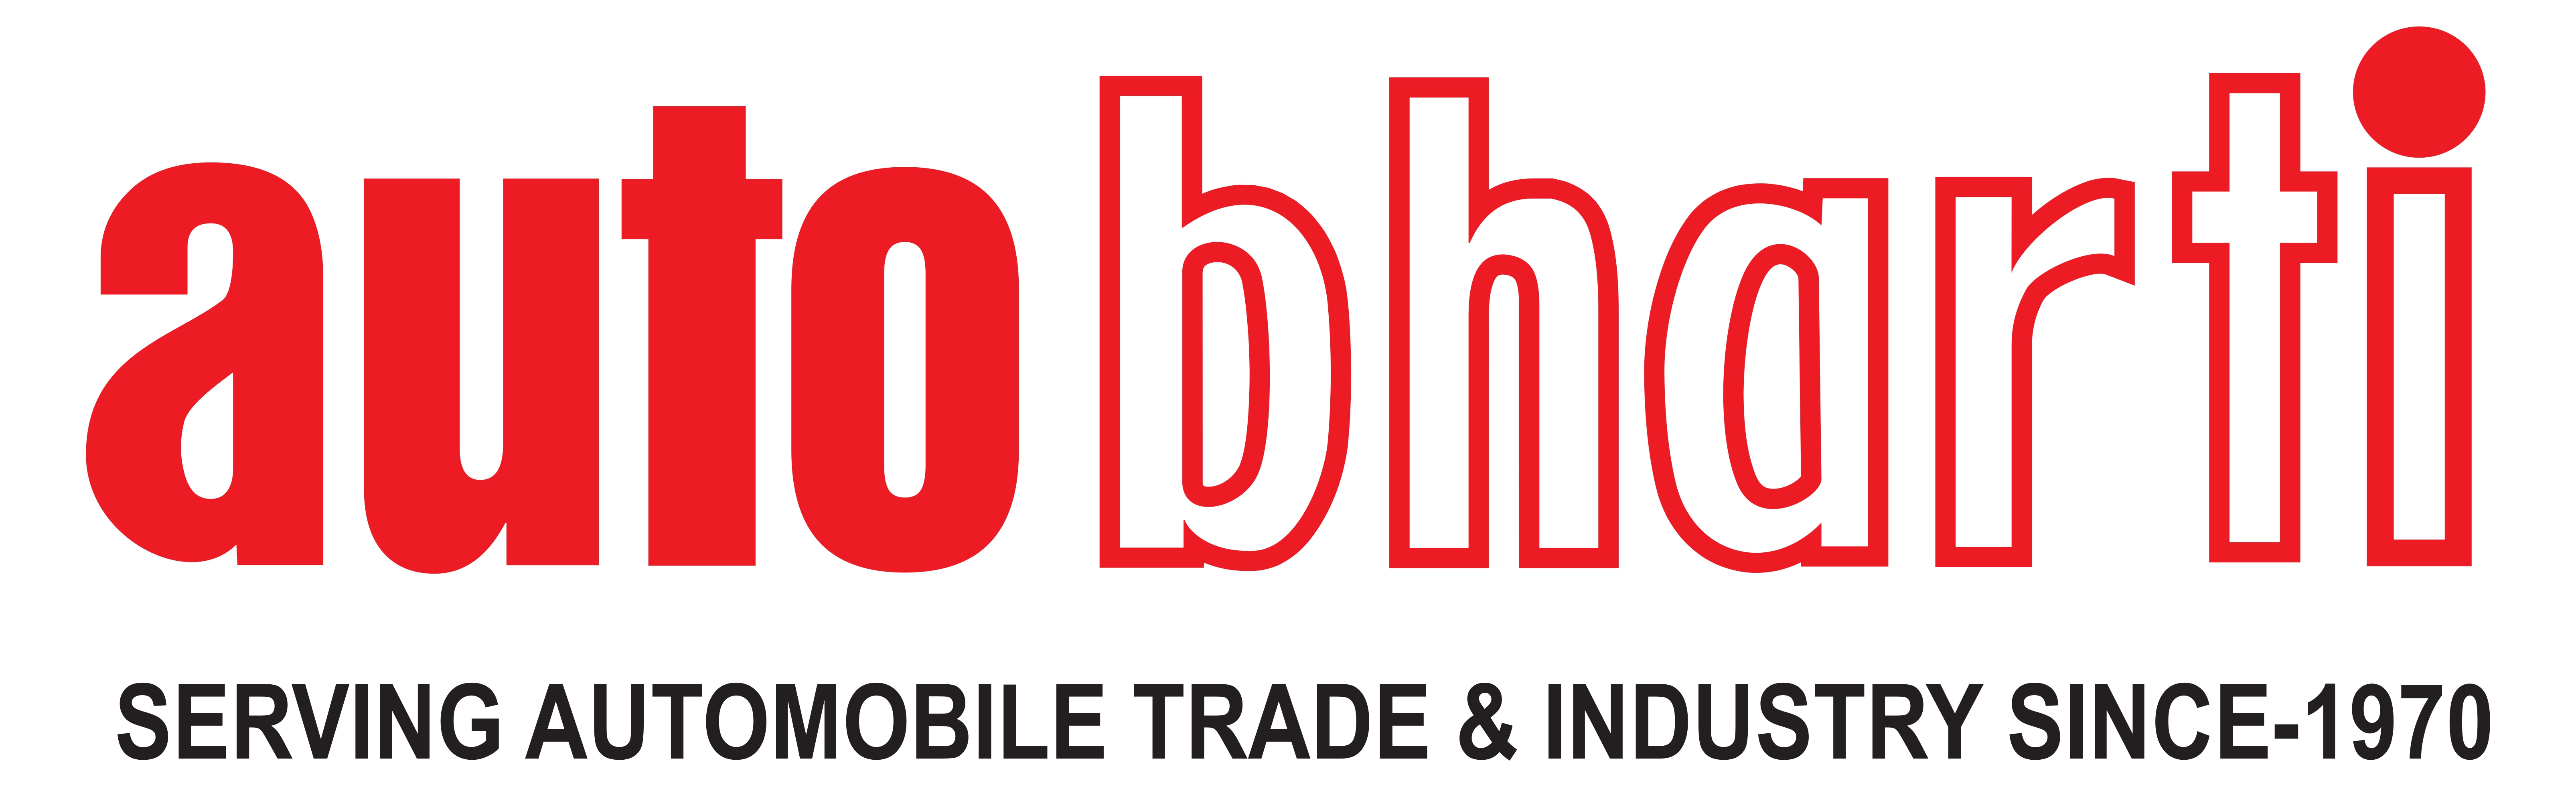 auto bharti logo_page-0001